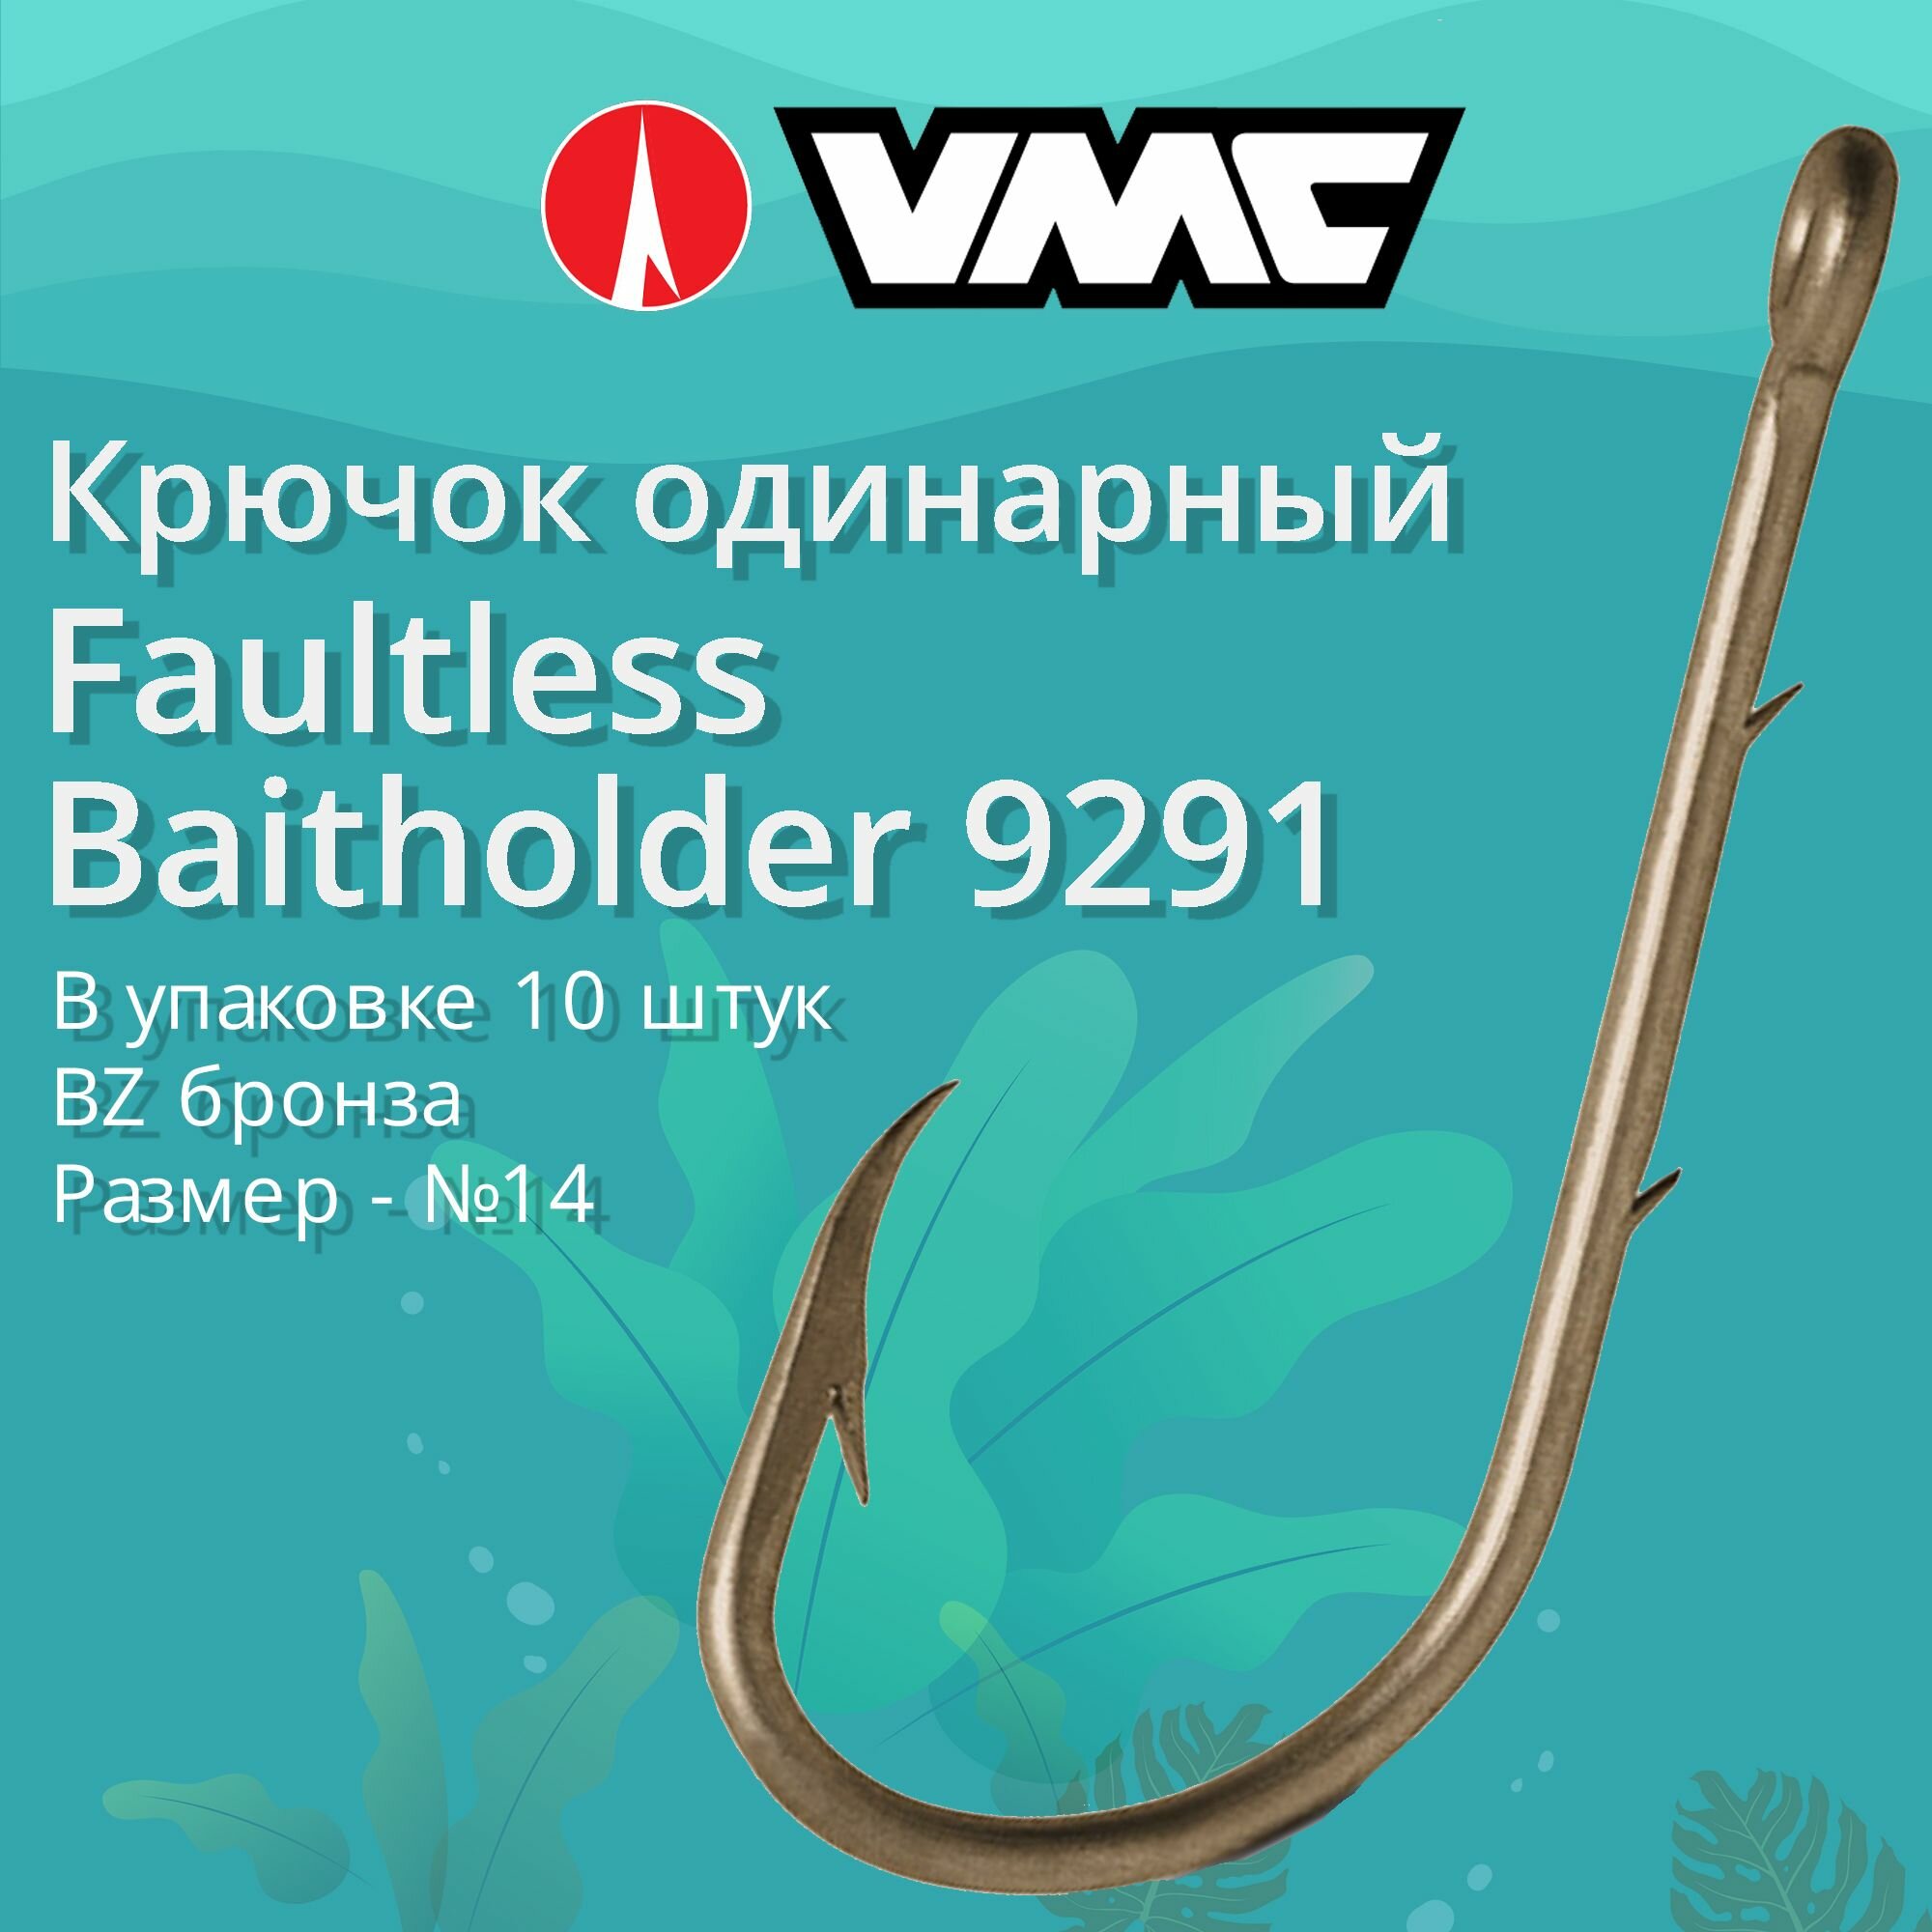 Крючки для рыбалки (одинарный) VMC Faultless Baitholder 9291 BZ (бронза) №14 упаковка 10 штук